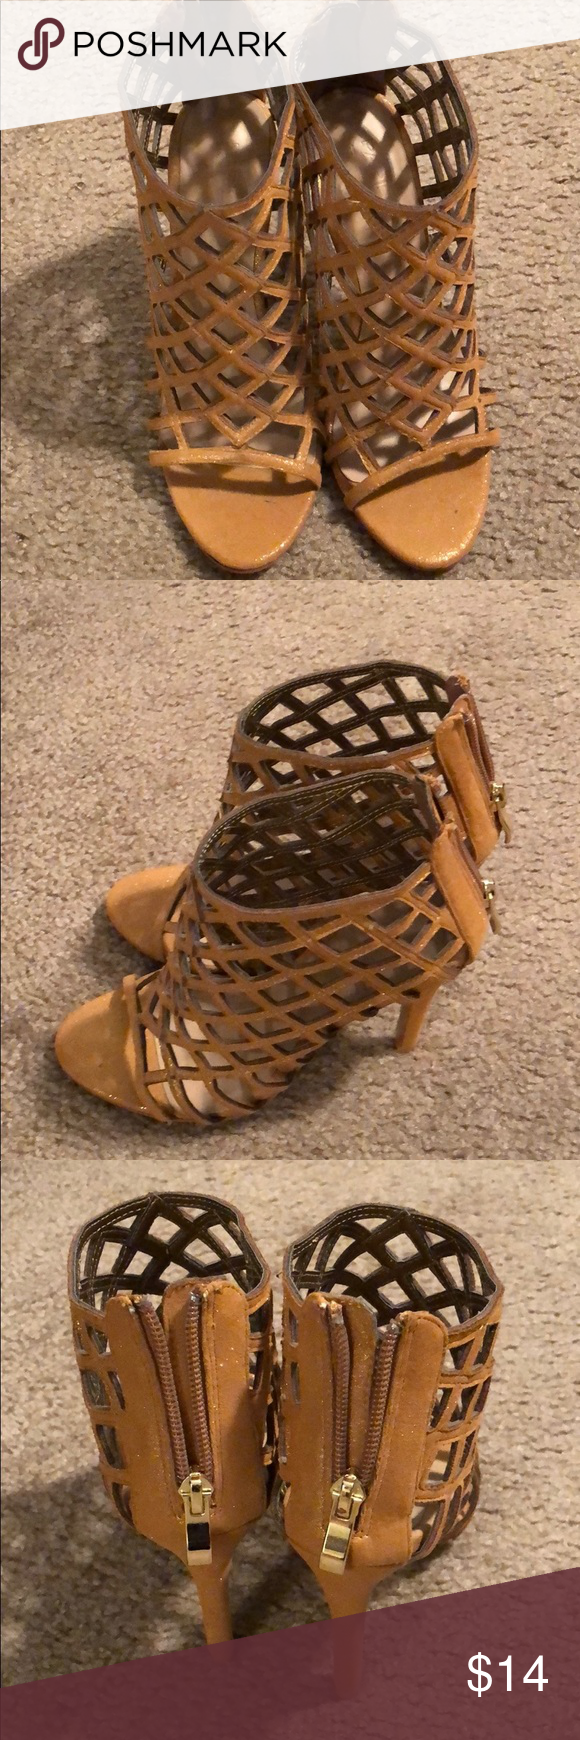 Parisian Gladiator Shoes Parisian Gladiator sandal heels shoes. Size 7. Never be…